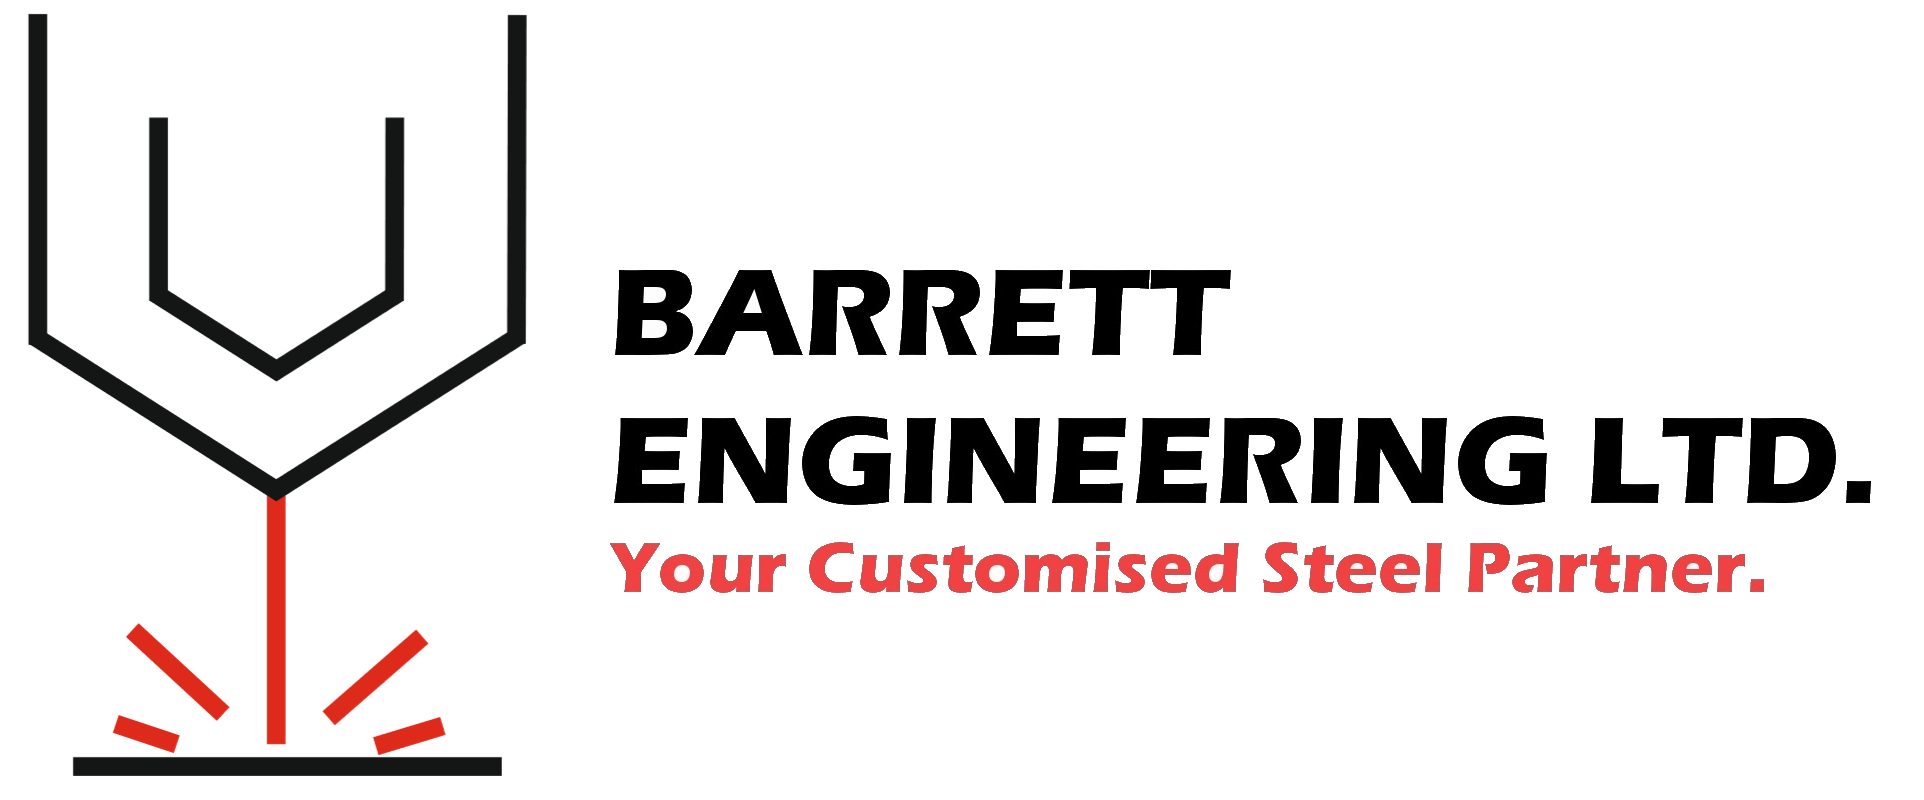 Barrett Engineering Specialist Steel Limerick